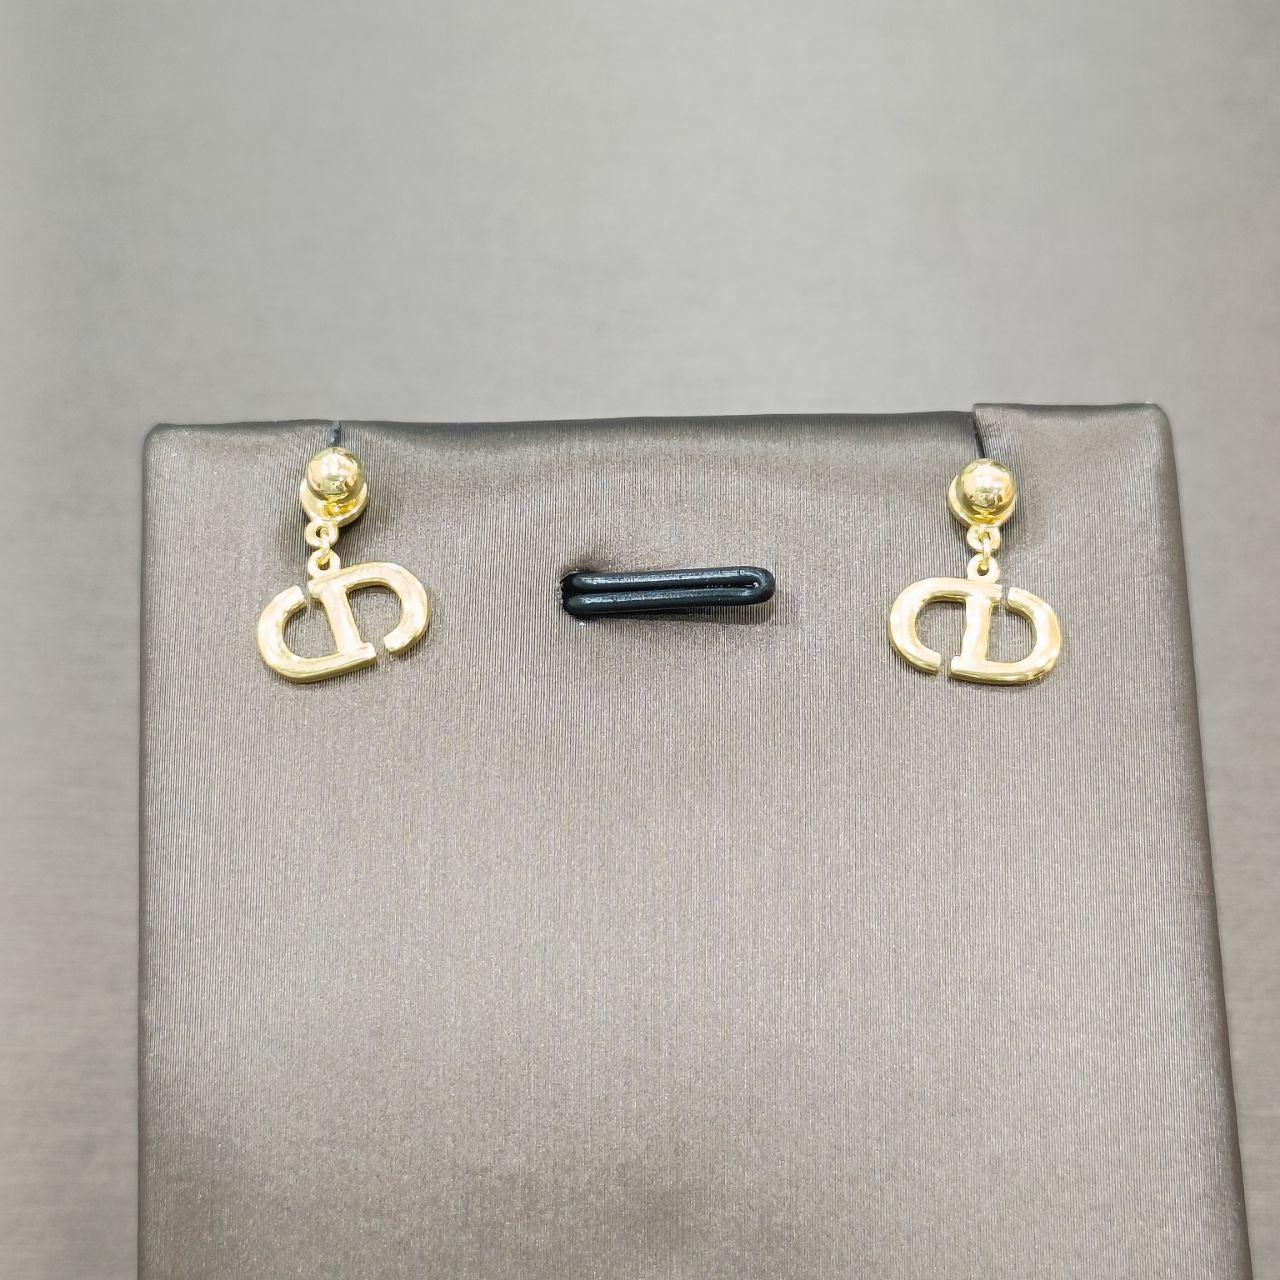 22k / 916 Gold D Design Earring 2 in 1-916 gold-Best Gold Shop